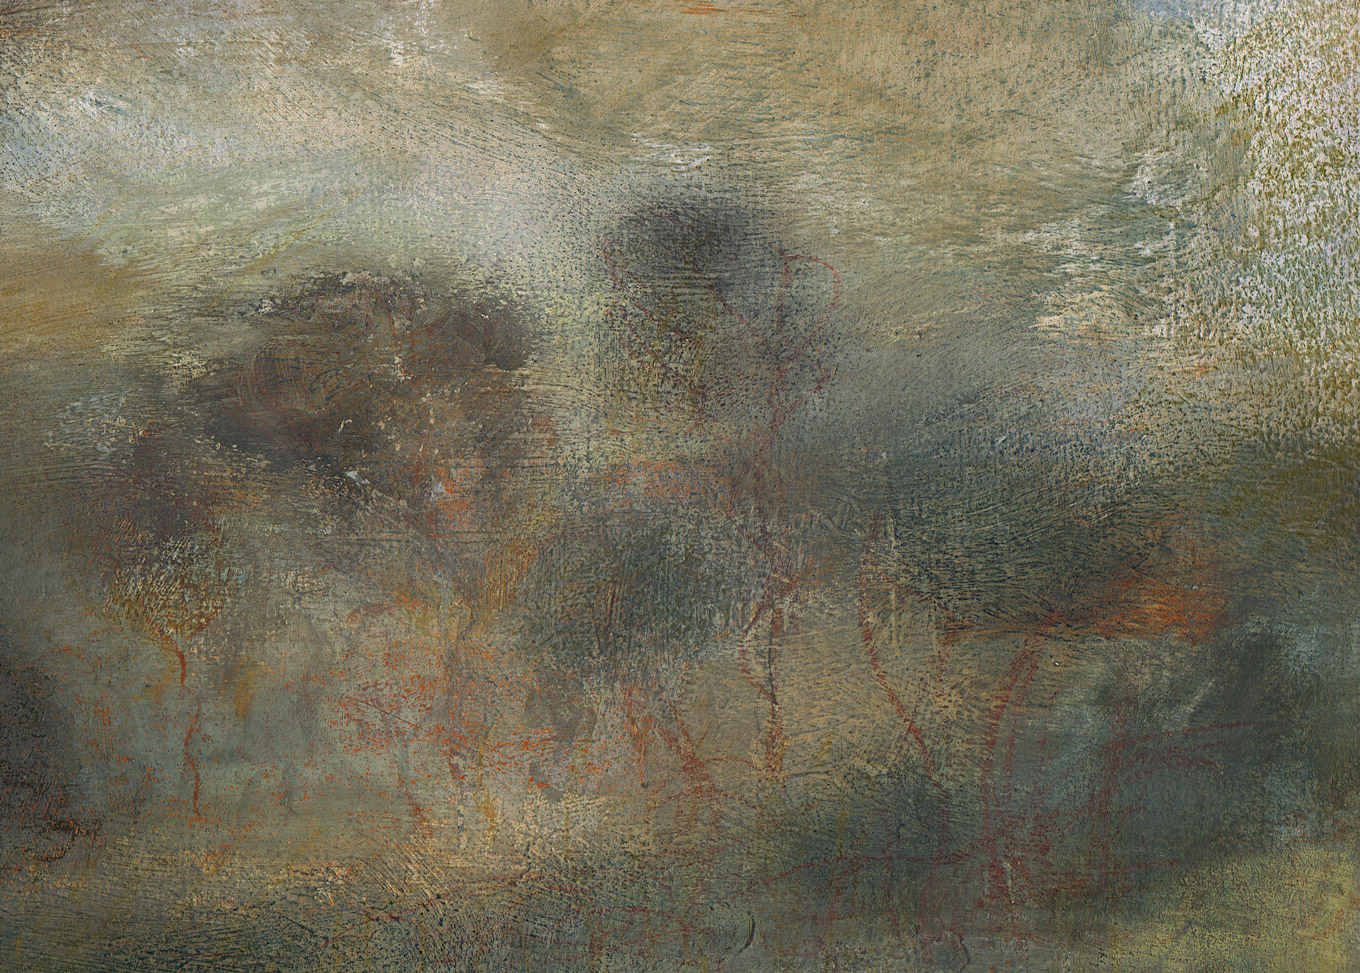 L1149 - Nicholas Herbert, British Artist, mixed media landscape painting of woodland, 2019